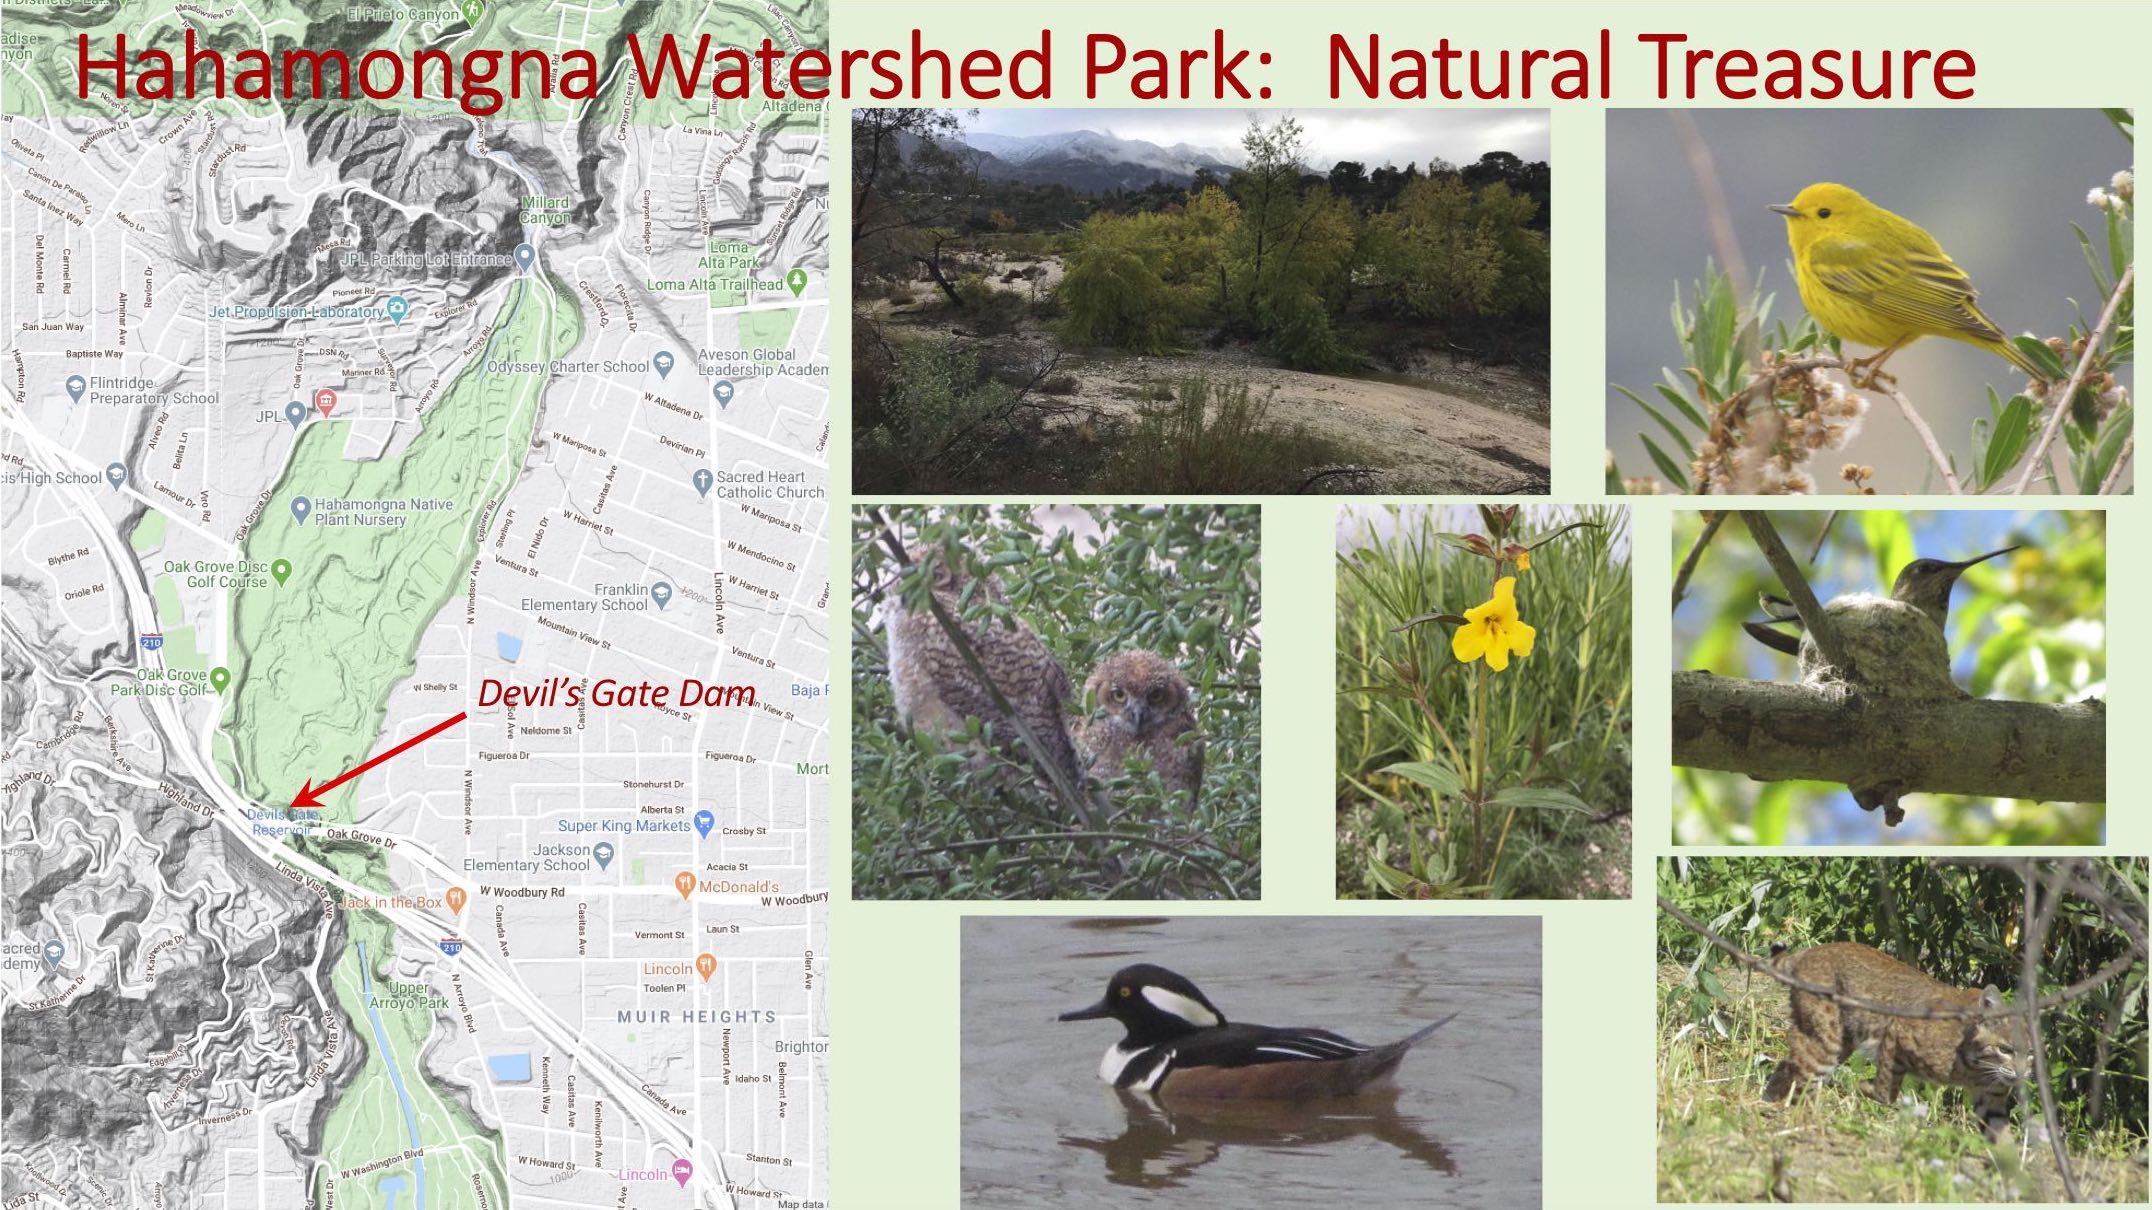 Hahamonga Watershed Park: A national treasure